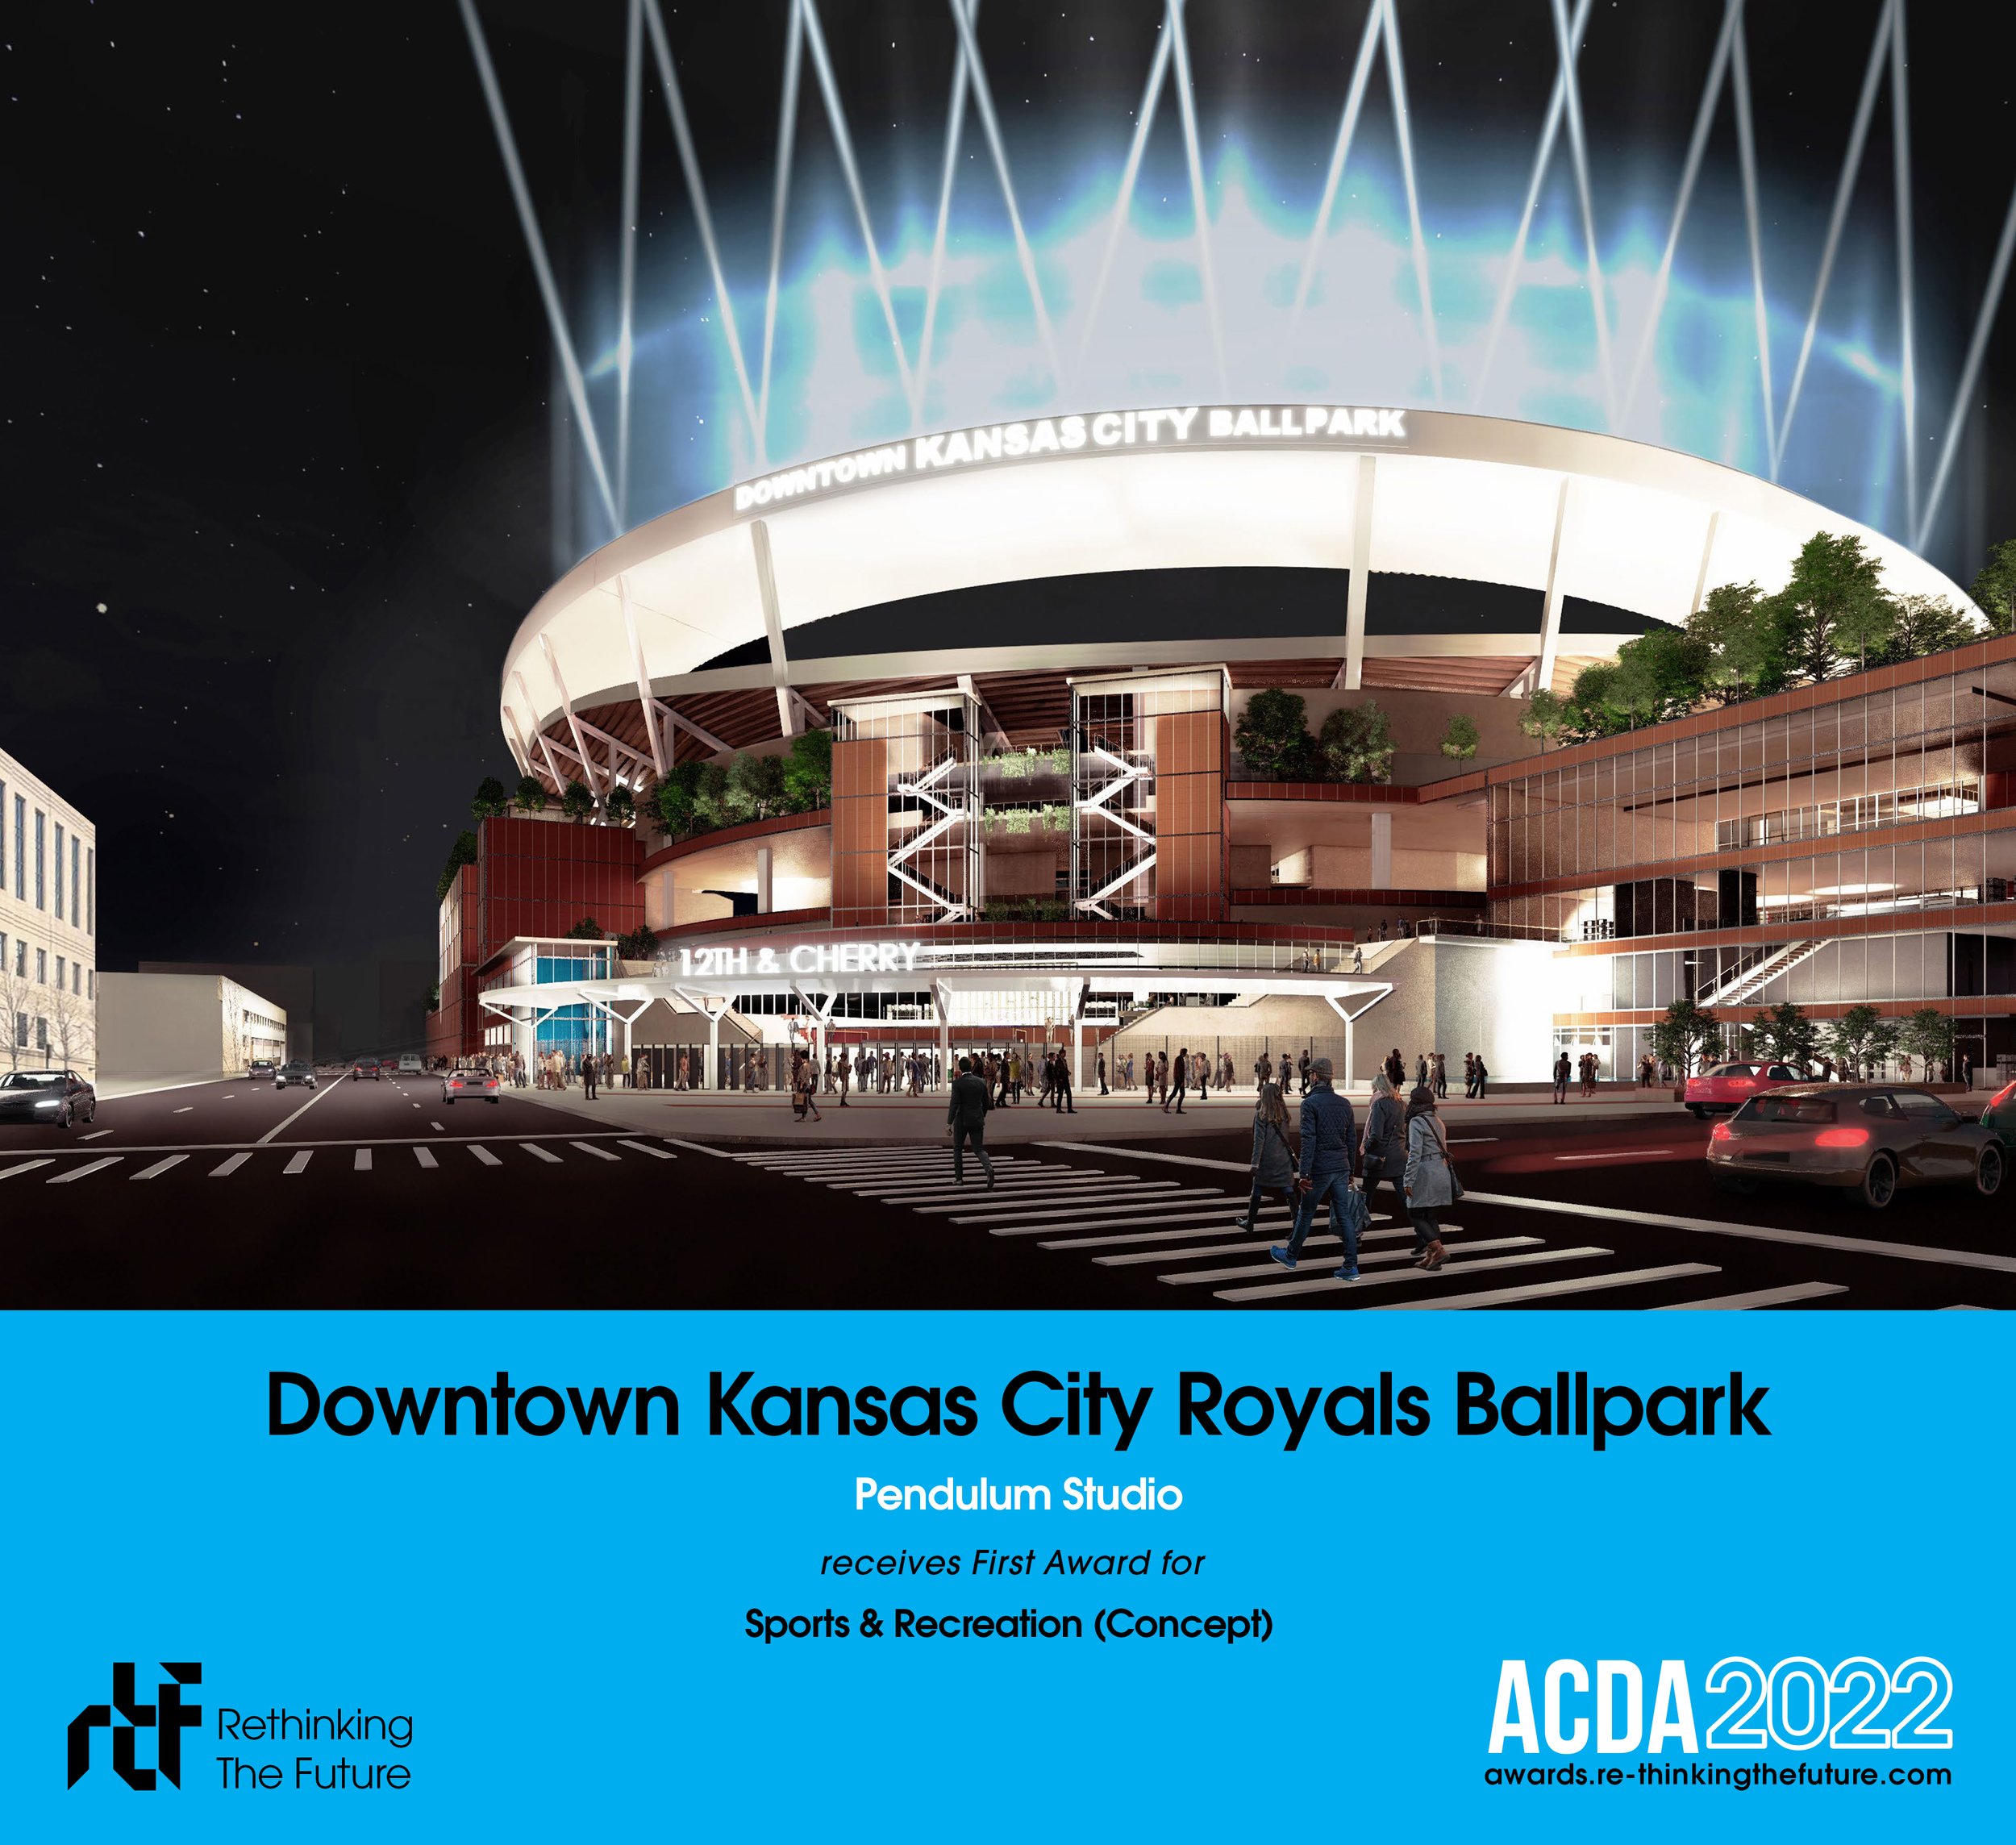 Downtown Kansas City Royals Ballpark - Pendulum Studio_image.jpg